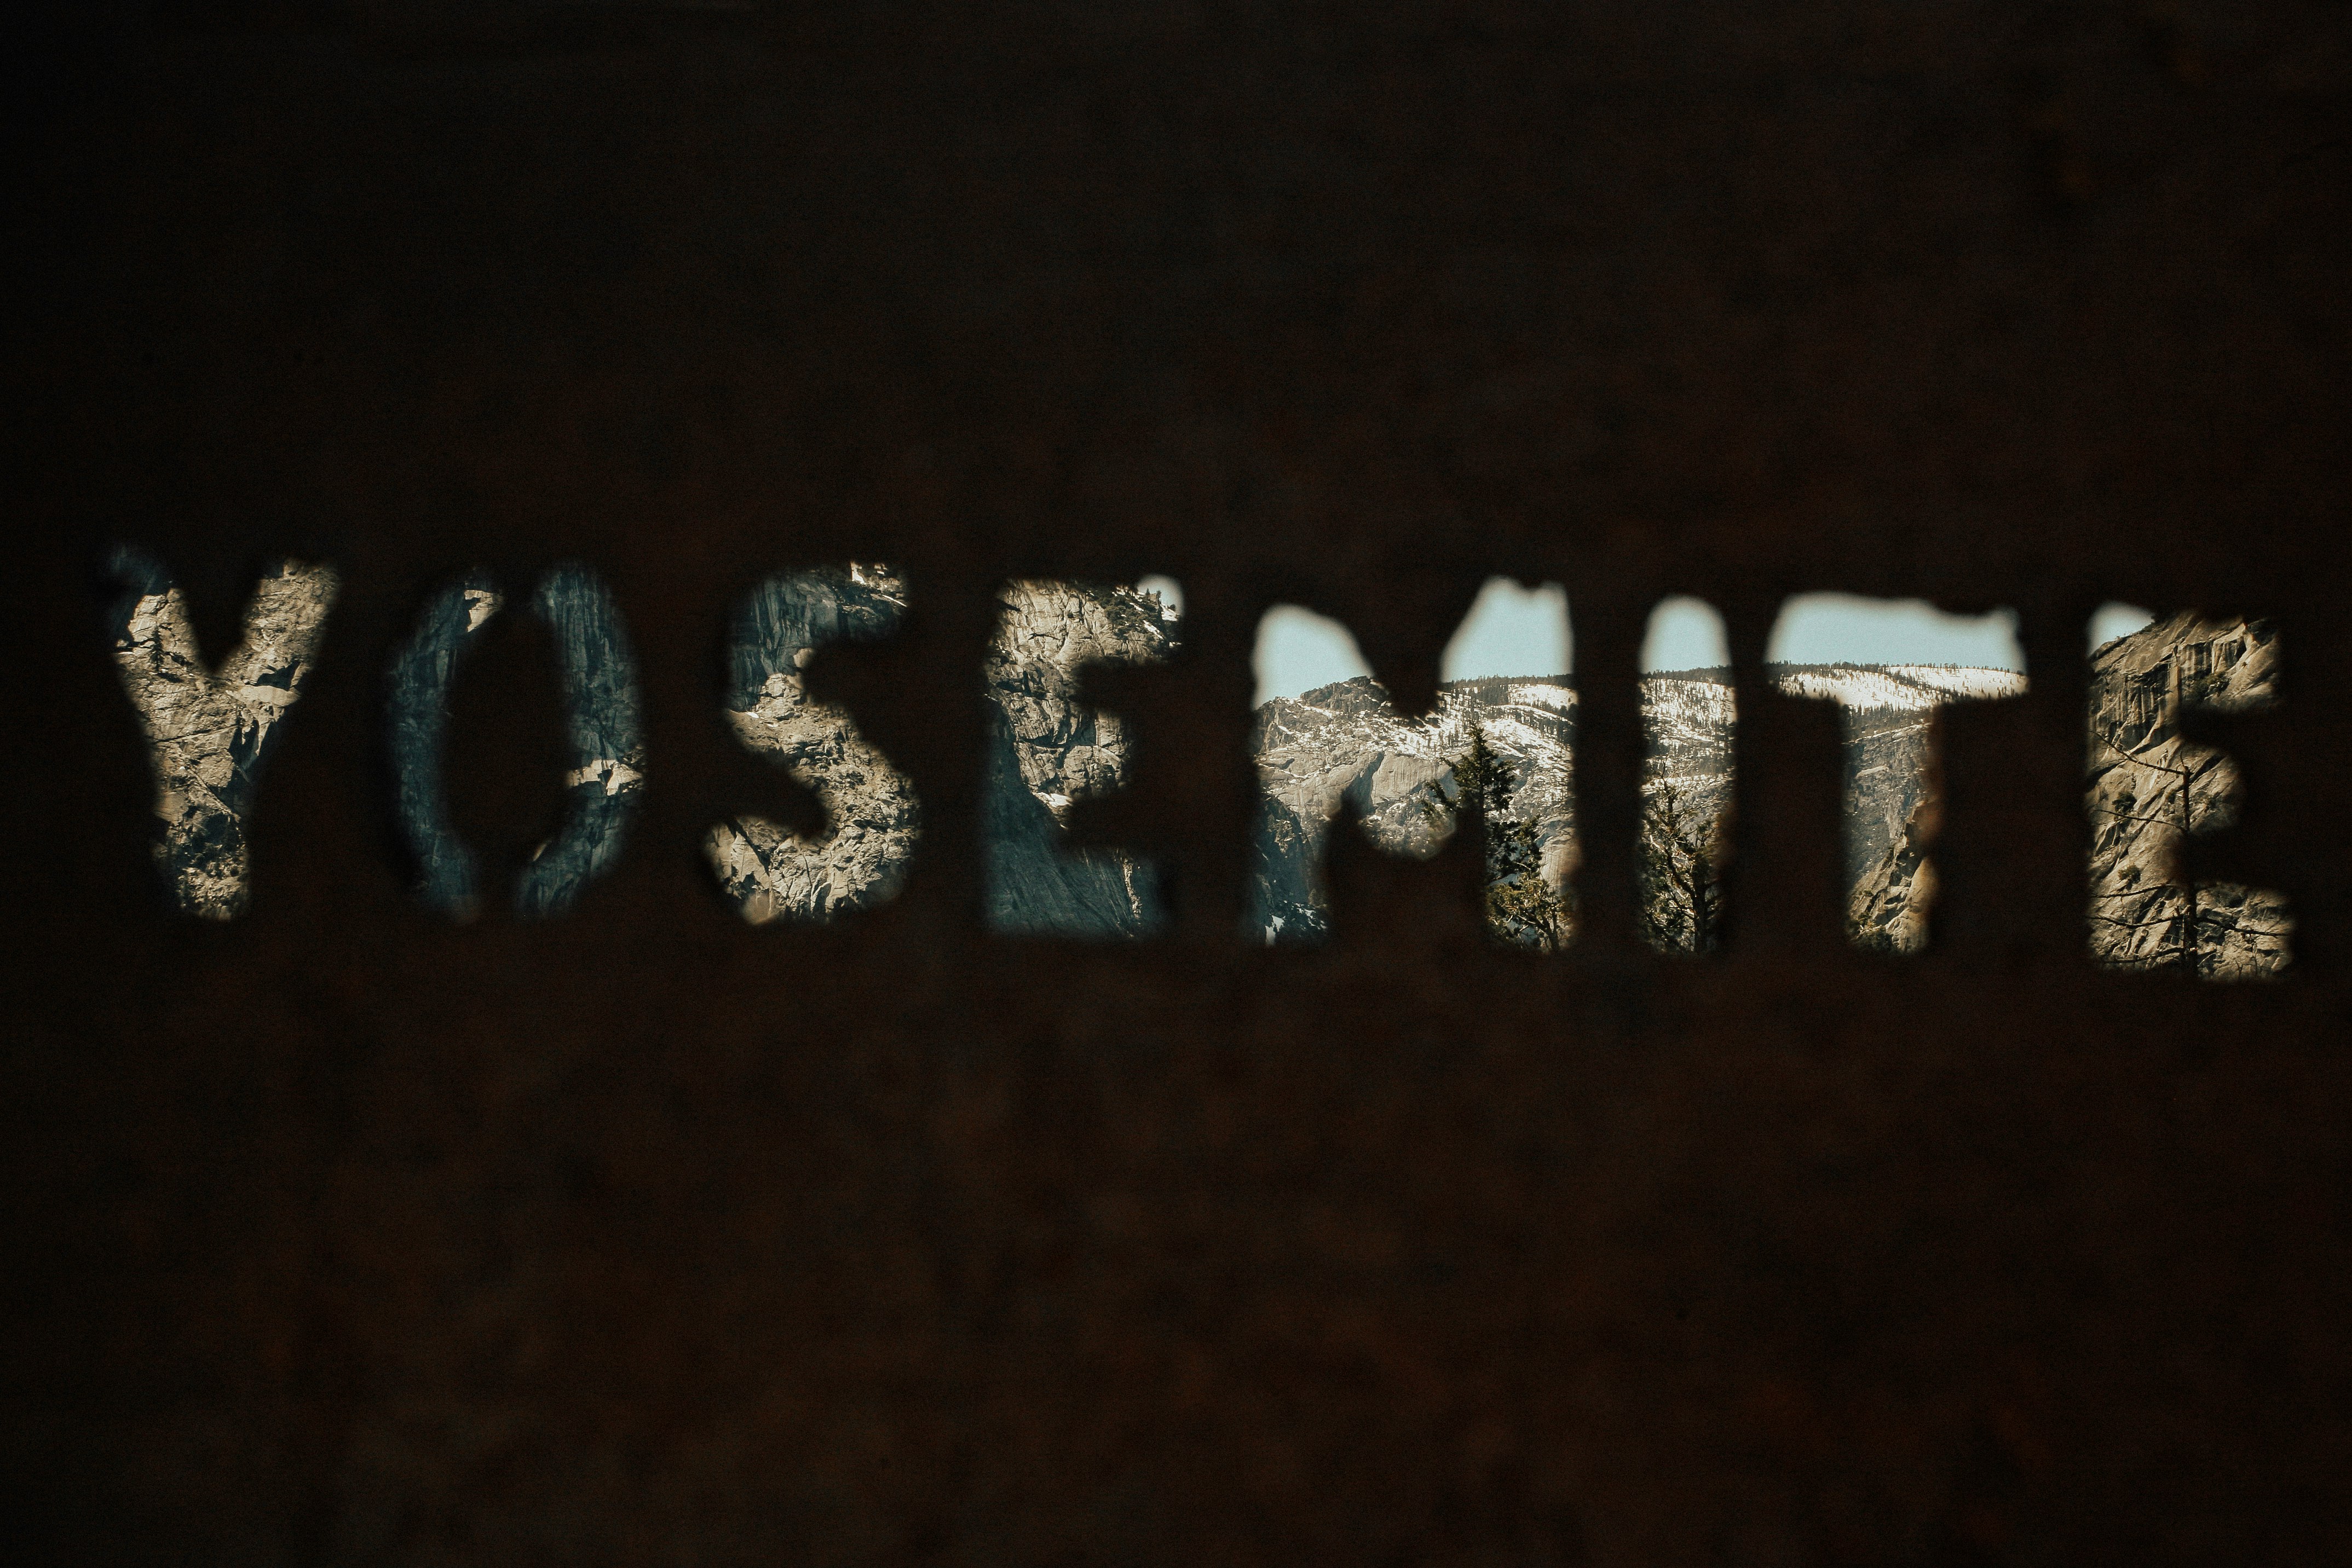 Yosemite text against black background